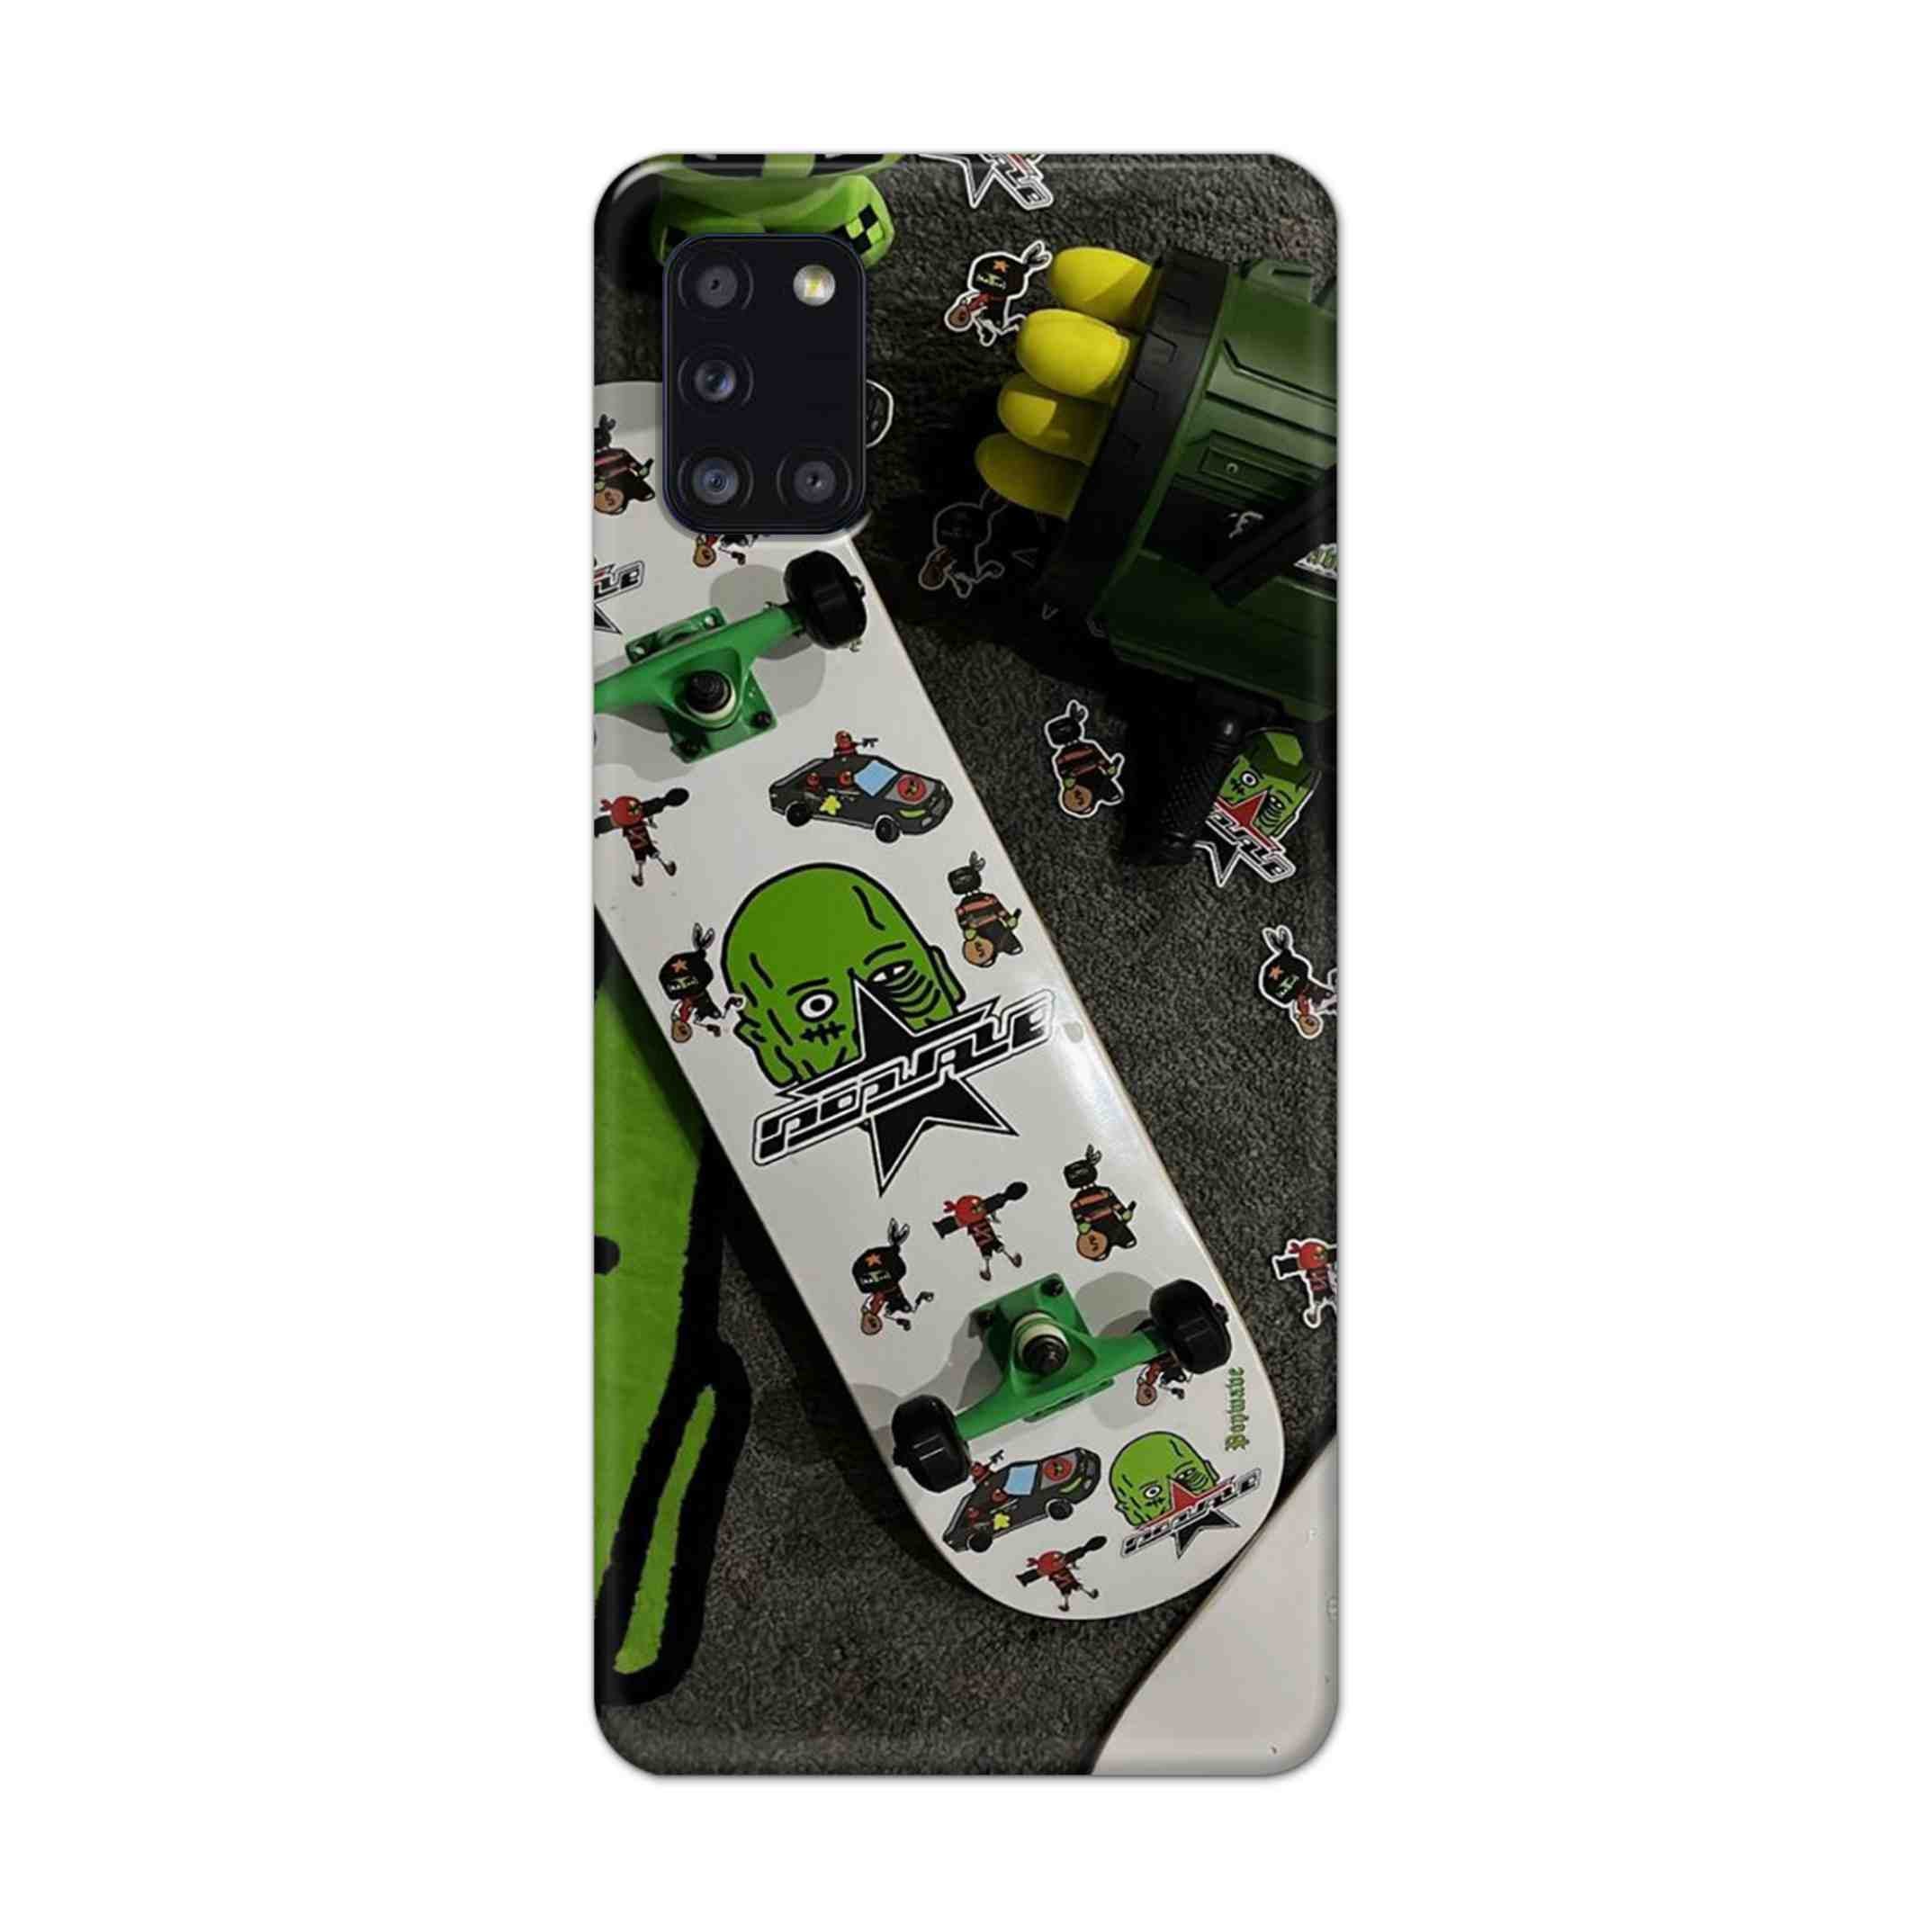 Buy Hulk Skateboard Hard Back Mobile Phone Case Cover For Samsung Galaxy A31 Online